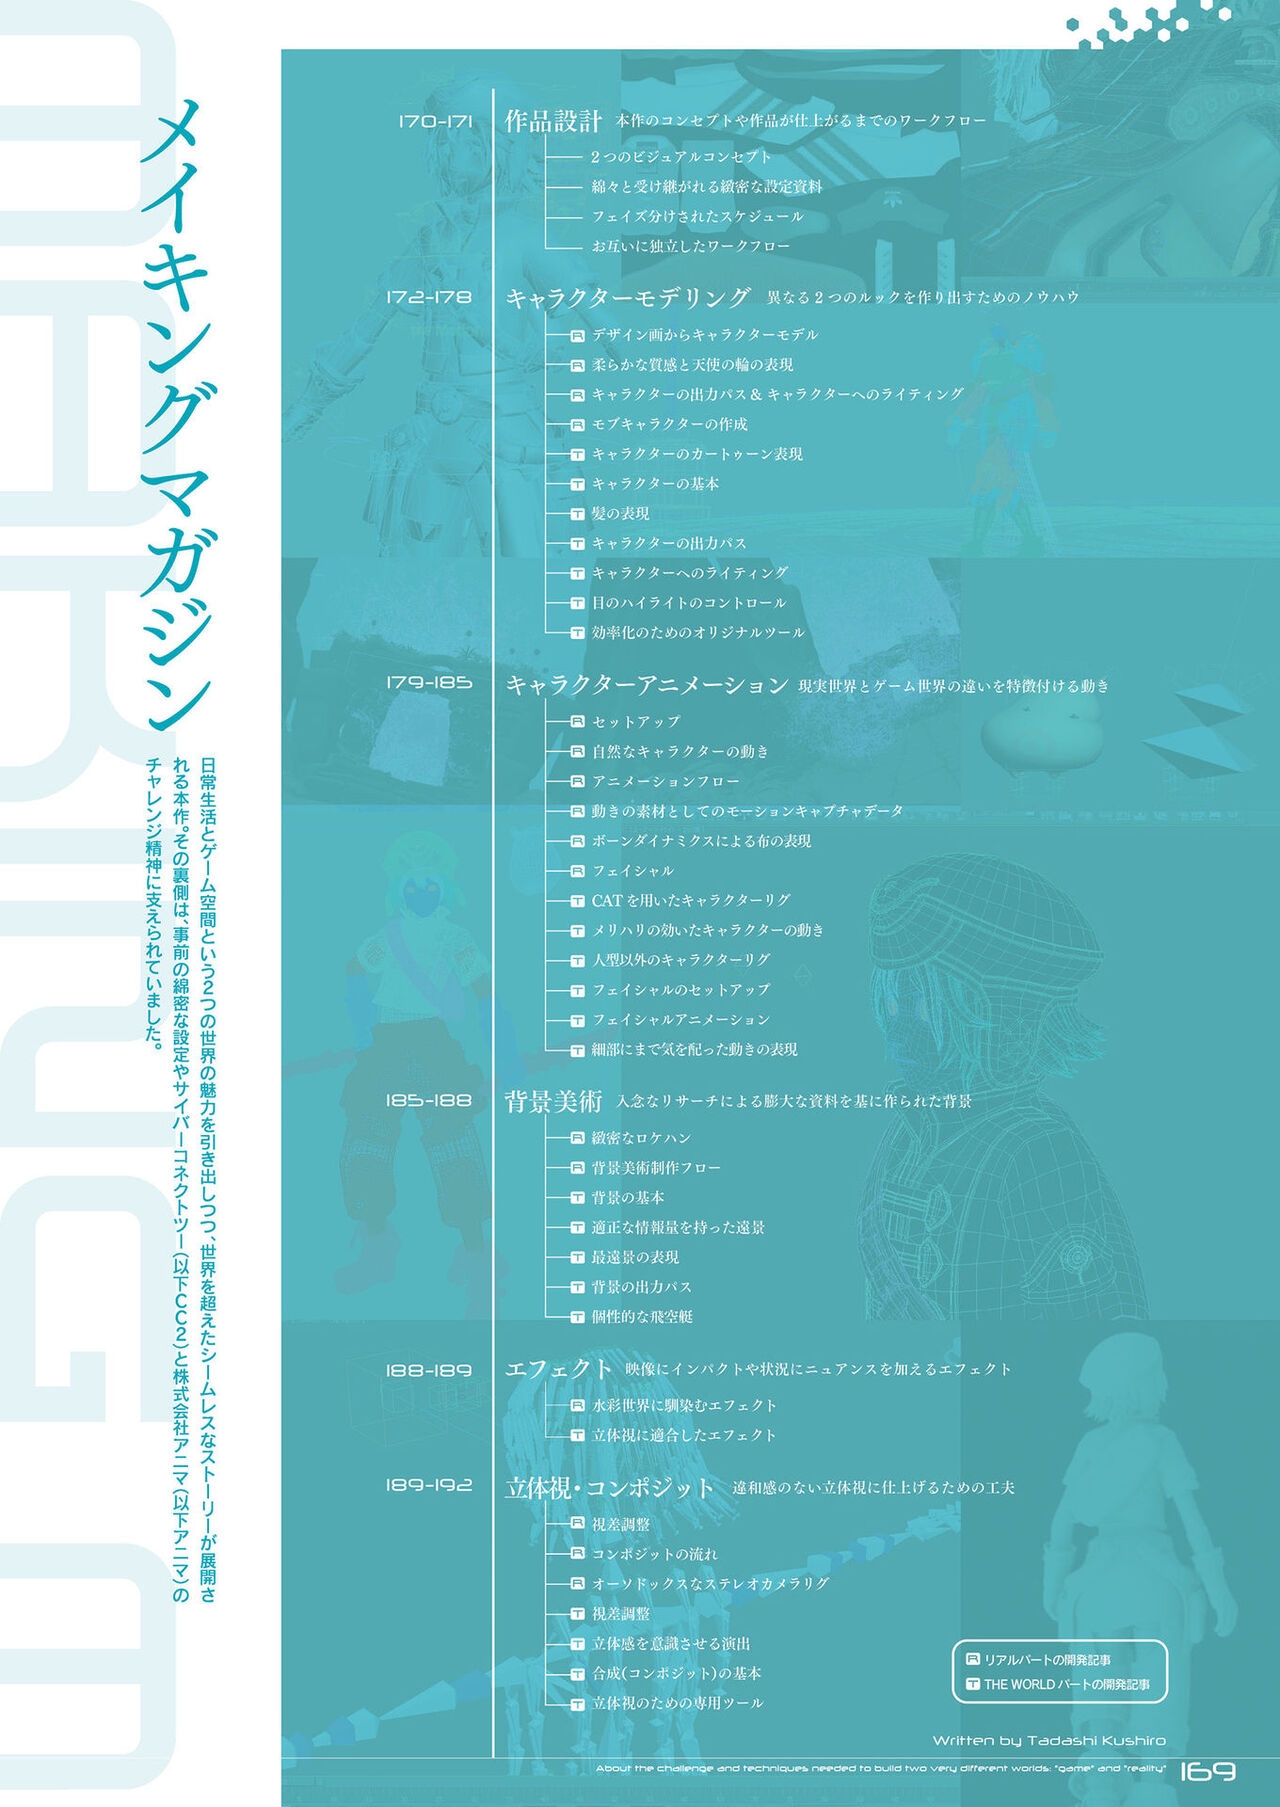 Dot Hack Sekai-no Muko ni  +Versus Complete Set  Documentation .hack //Archives _ 05 171